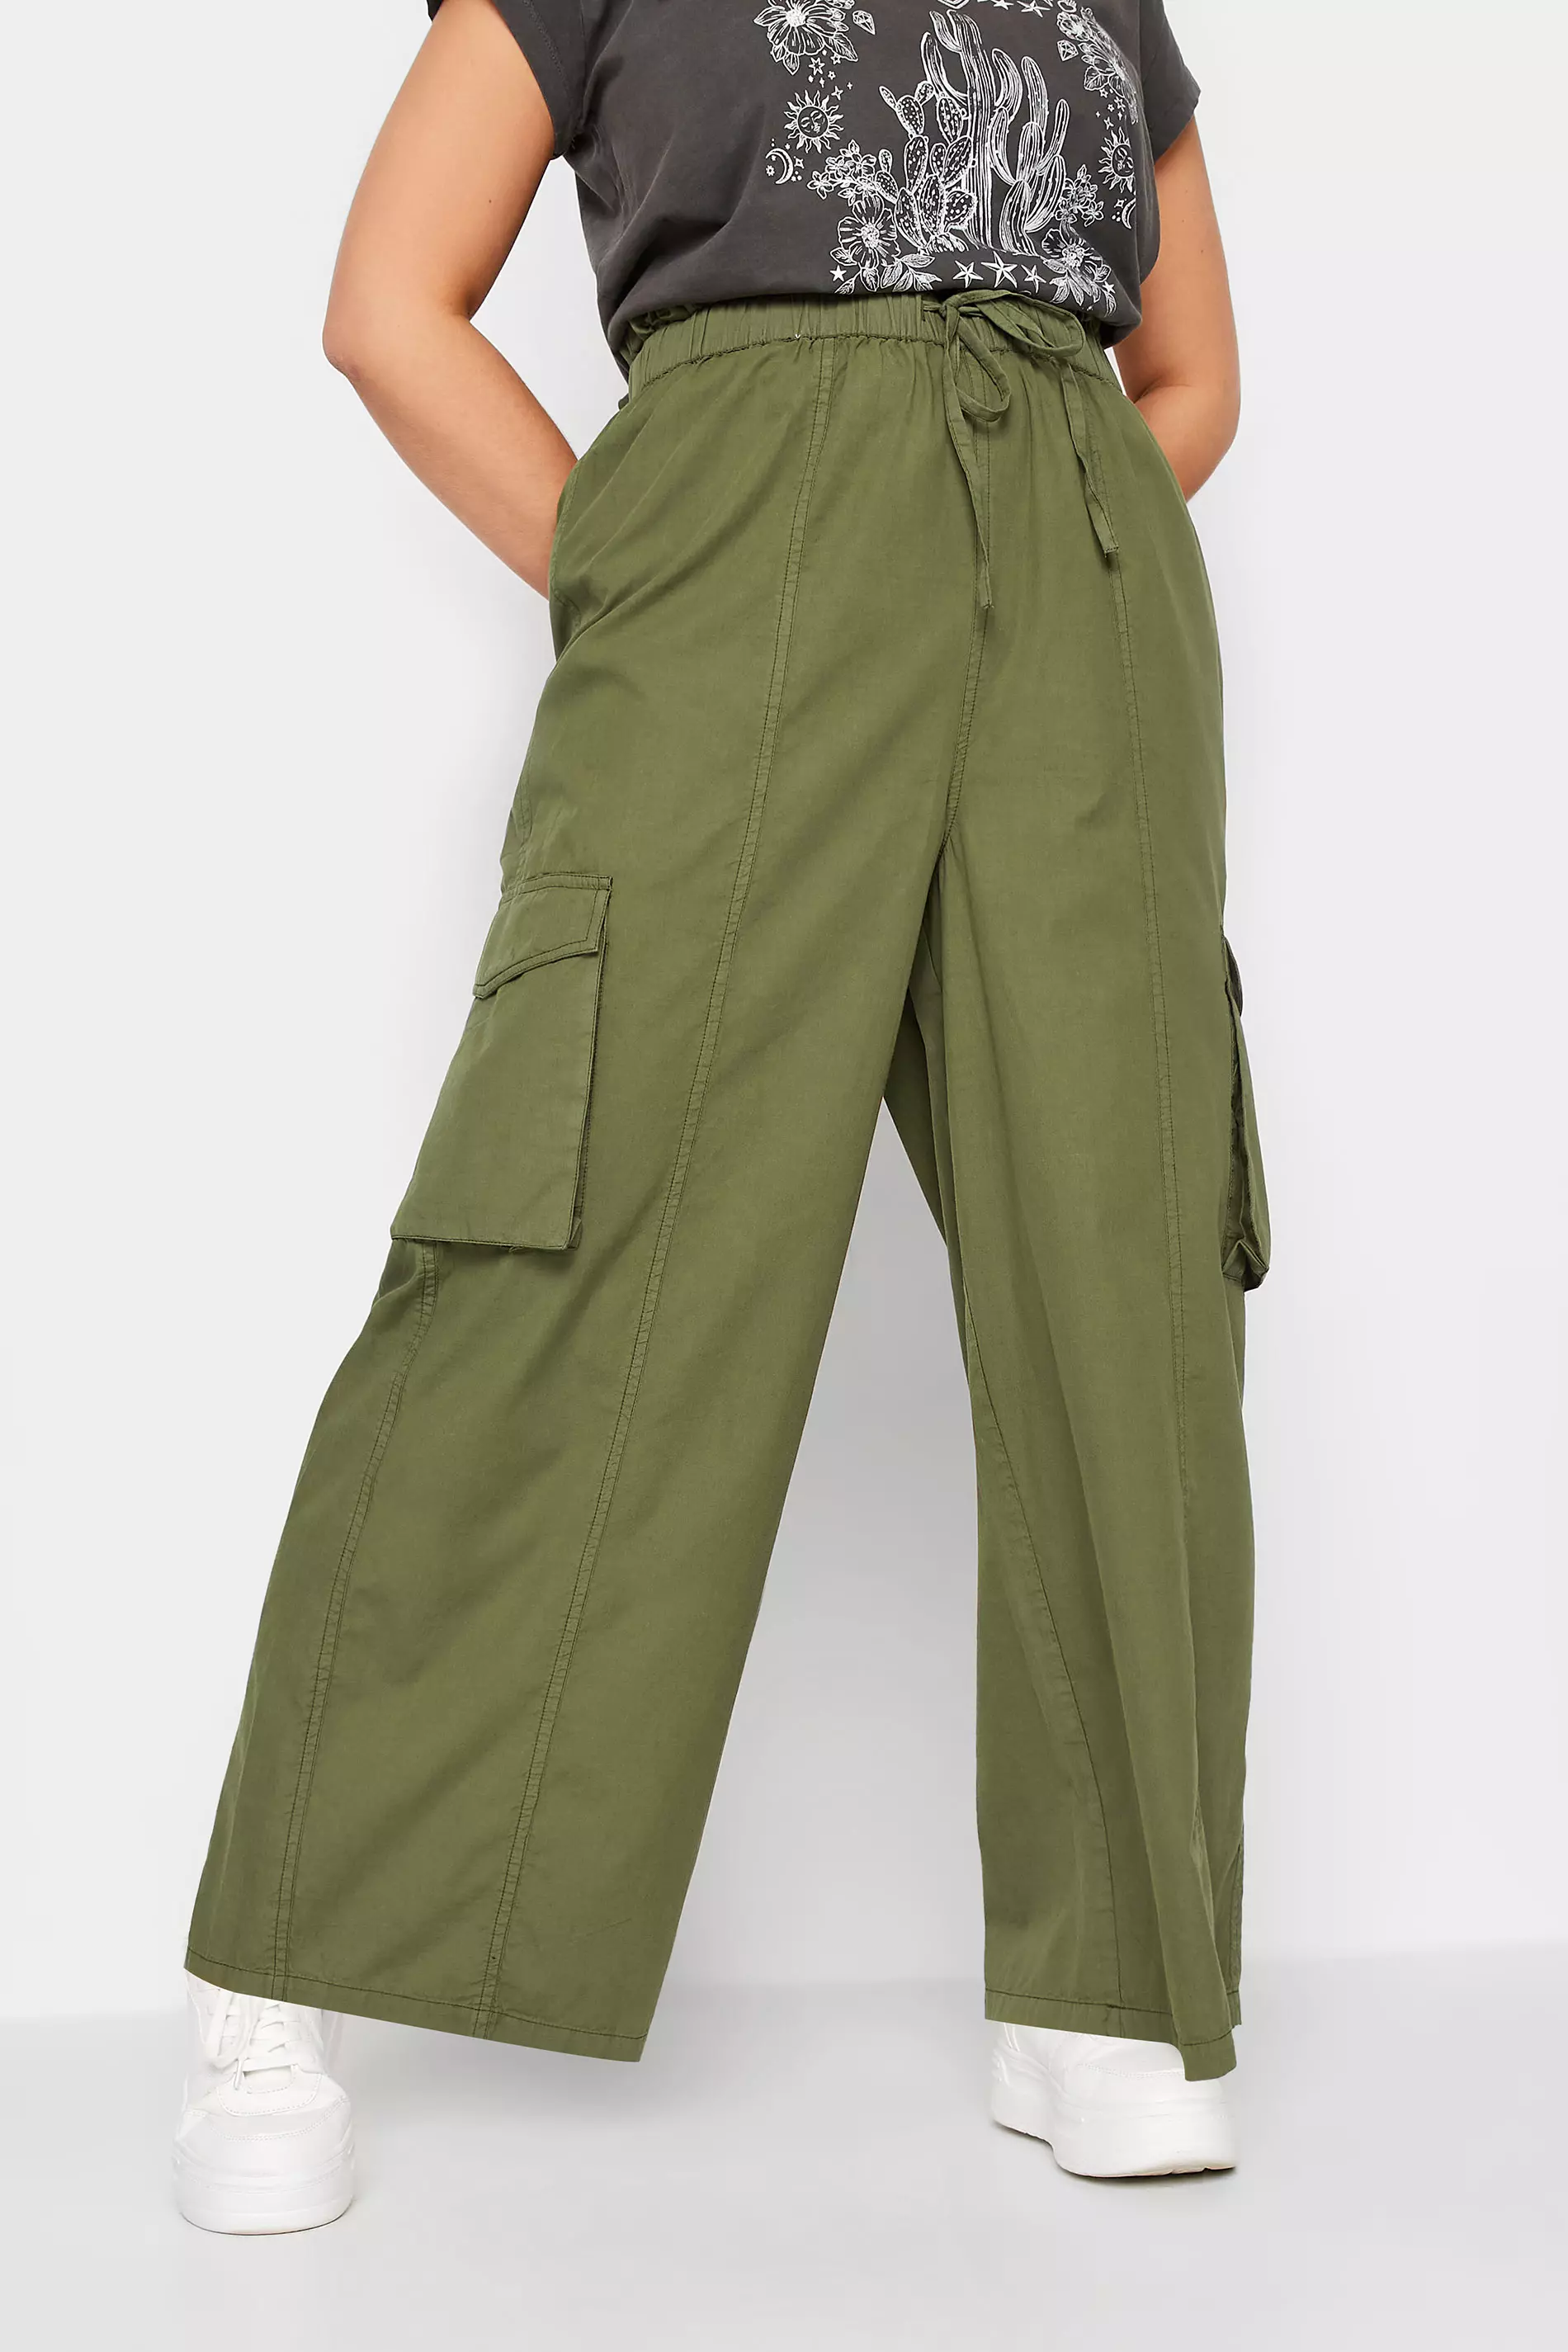 RYRJJ Wide Leg Cargo Pants for Women Low Rise Trousers with Multi-Pockets  Fashion Y2K Streetwear Drawstring Casual Baggy Pants(Army Green,S) -  Walmart.com